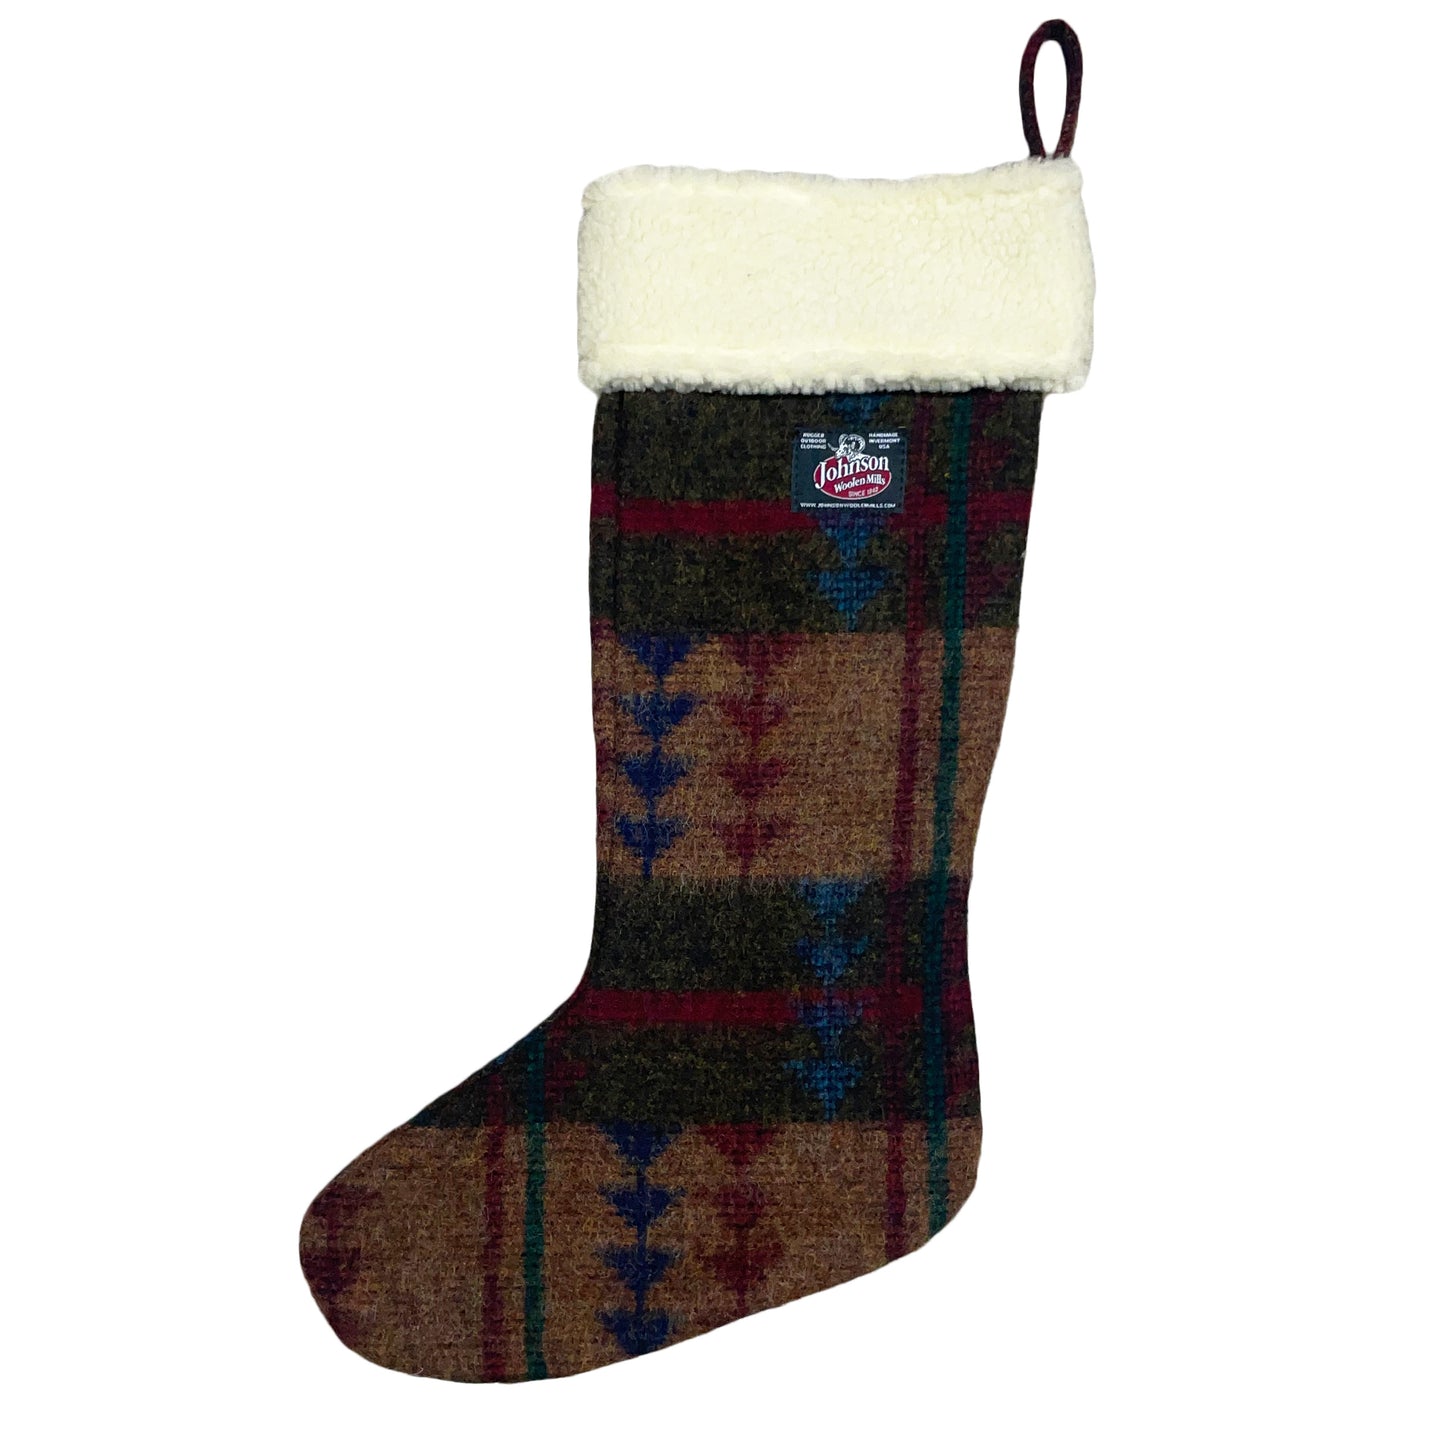 Johnson Woolen Mills lodge print wool Christmas stocking